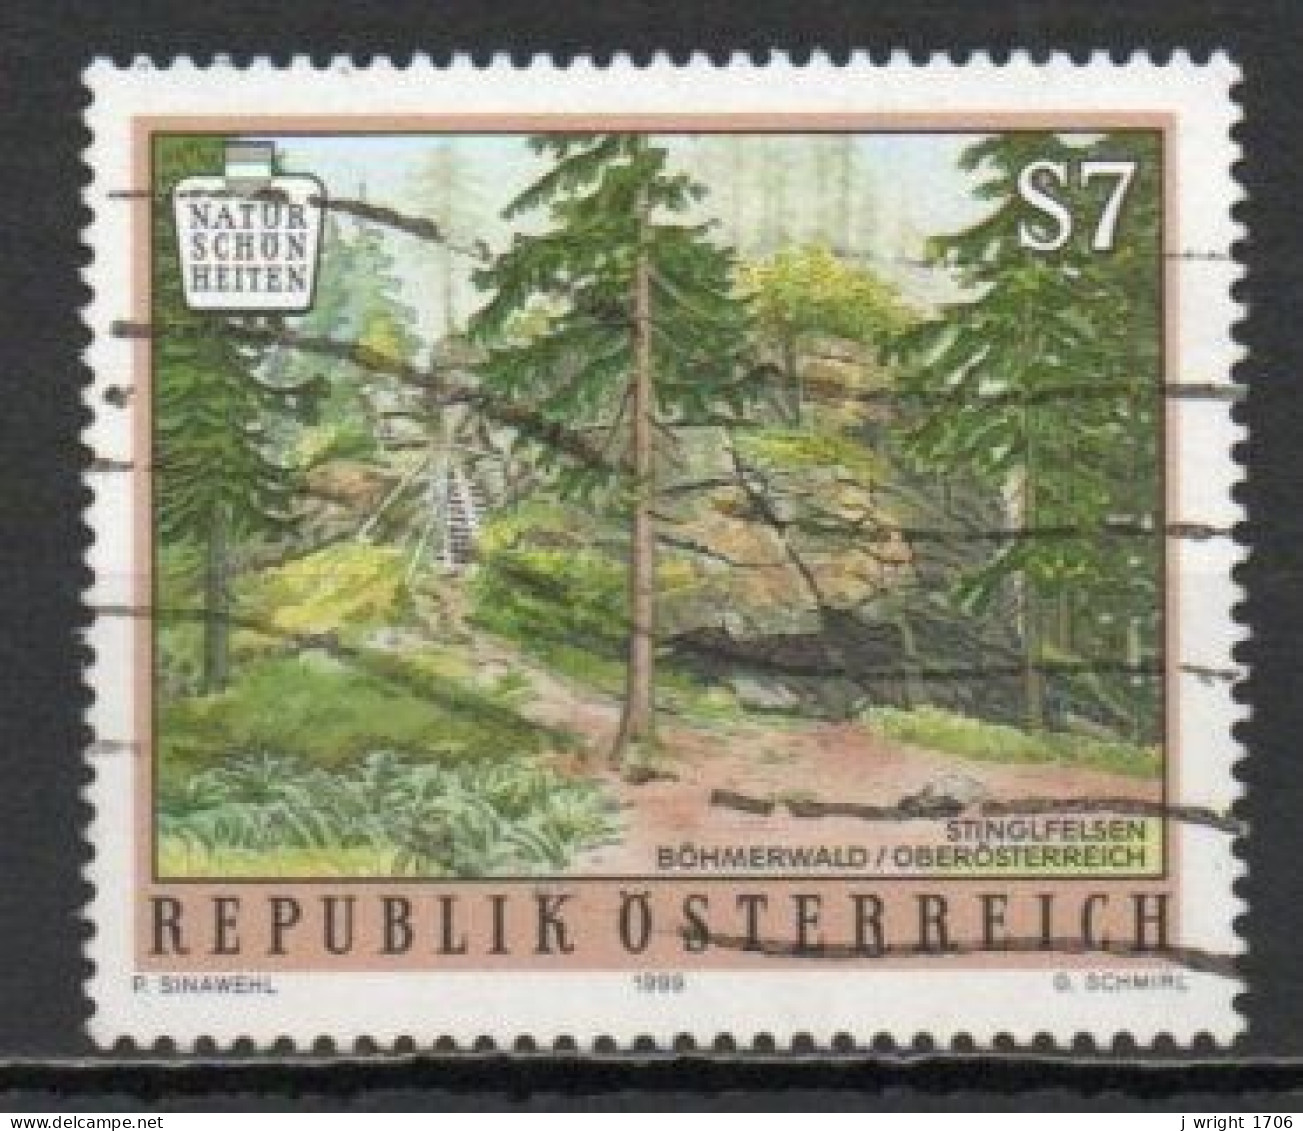 Austria, 1999, Austrian Natural Beauty/Stinglfelsen, 7s, USED - Gebraucht